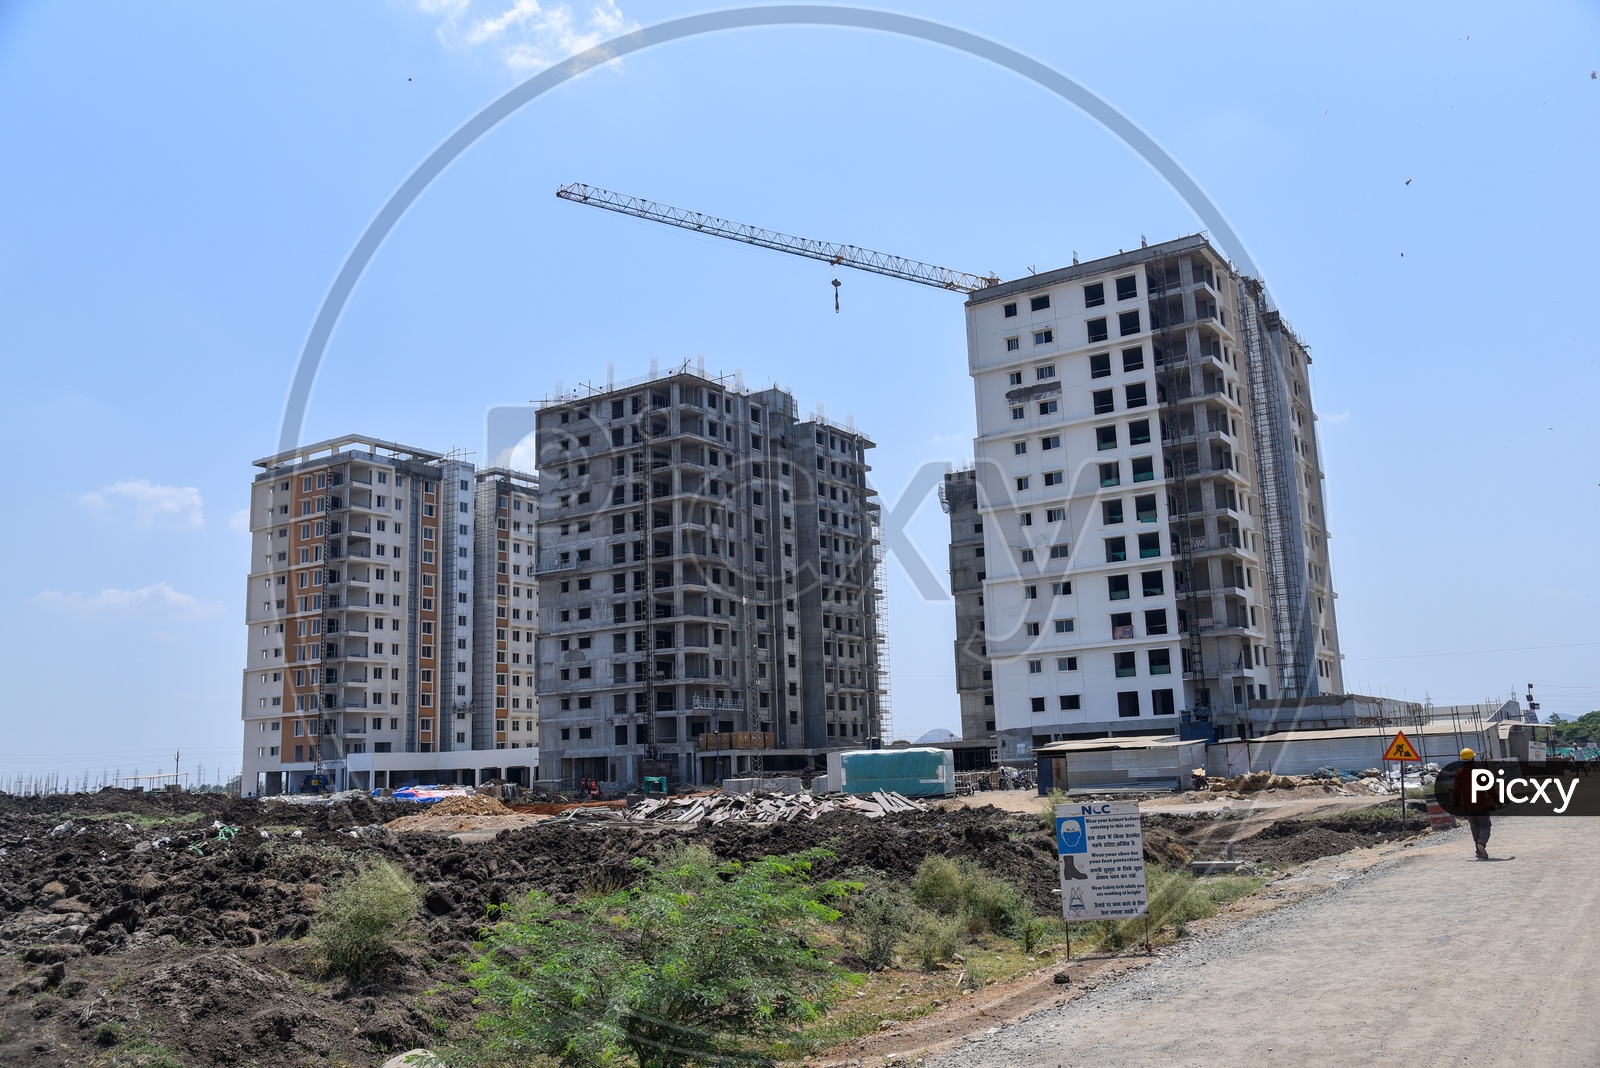 Construction of AIS Housing Project in Amaravati